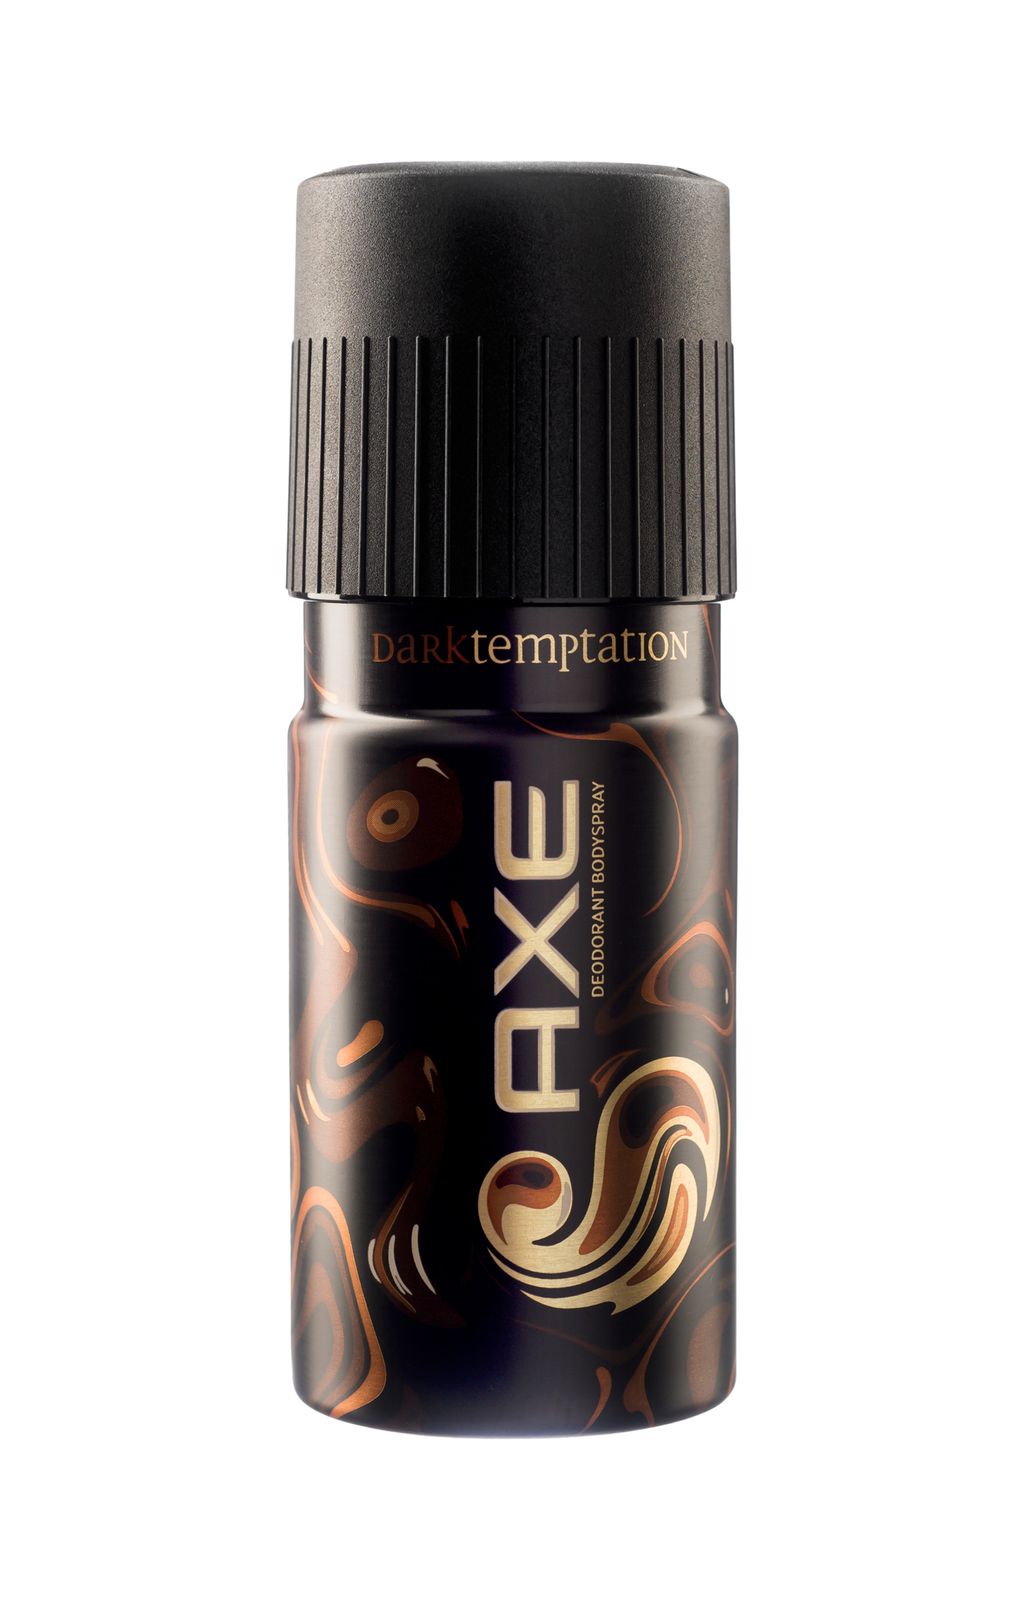 Axe Dark Temptation дезодорант спрей, спрей, 150 мл, 1 шт.